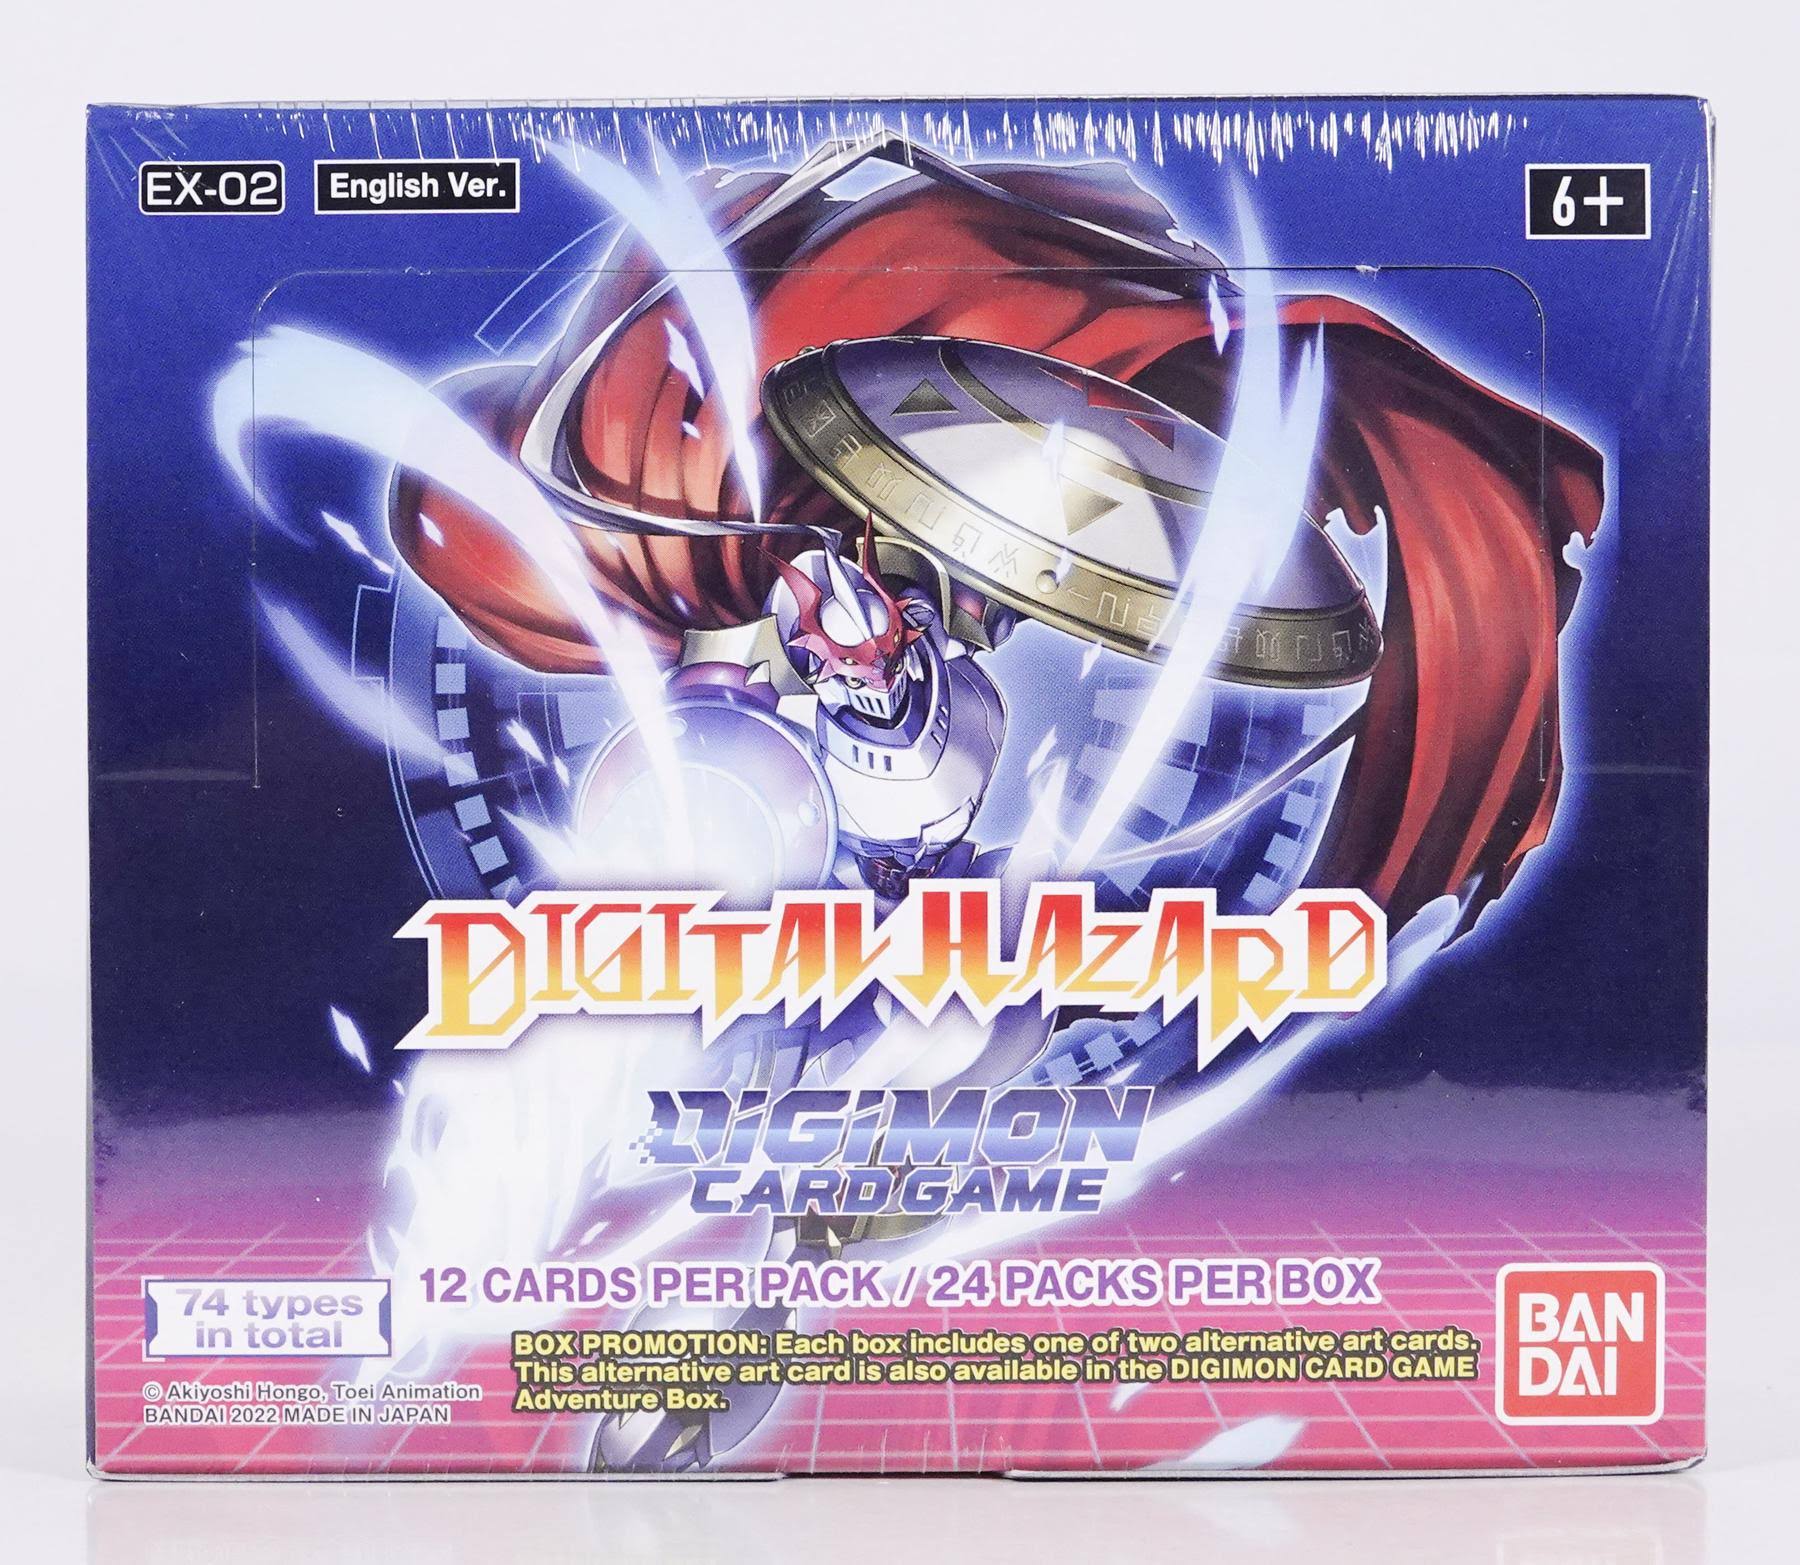 Digimon Card Game Digital Hazard Booster Box [EX-02]